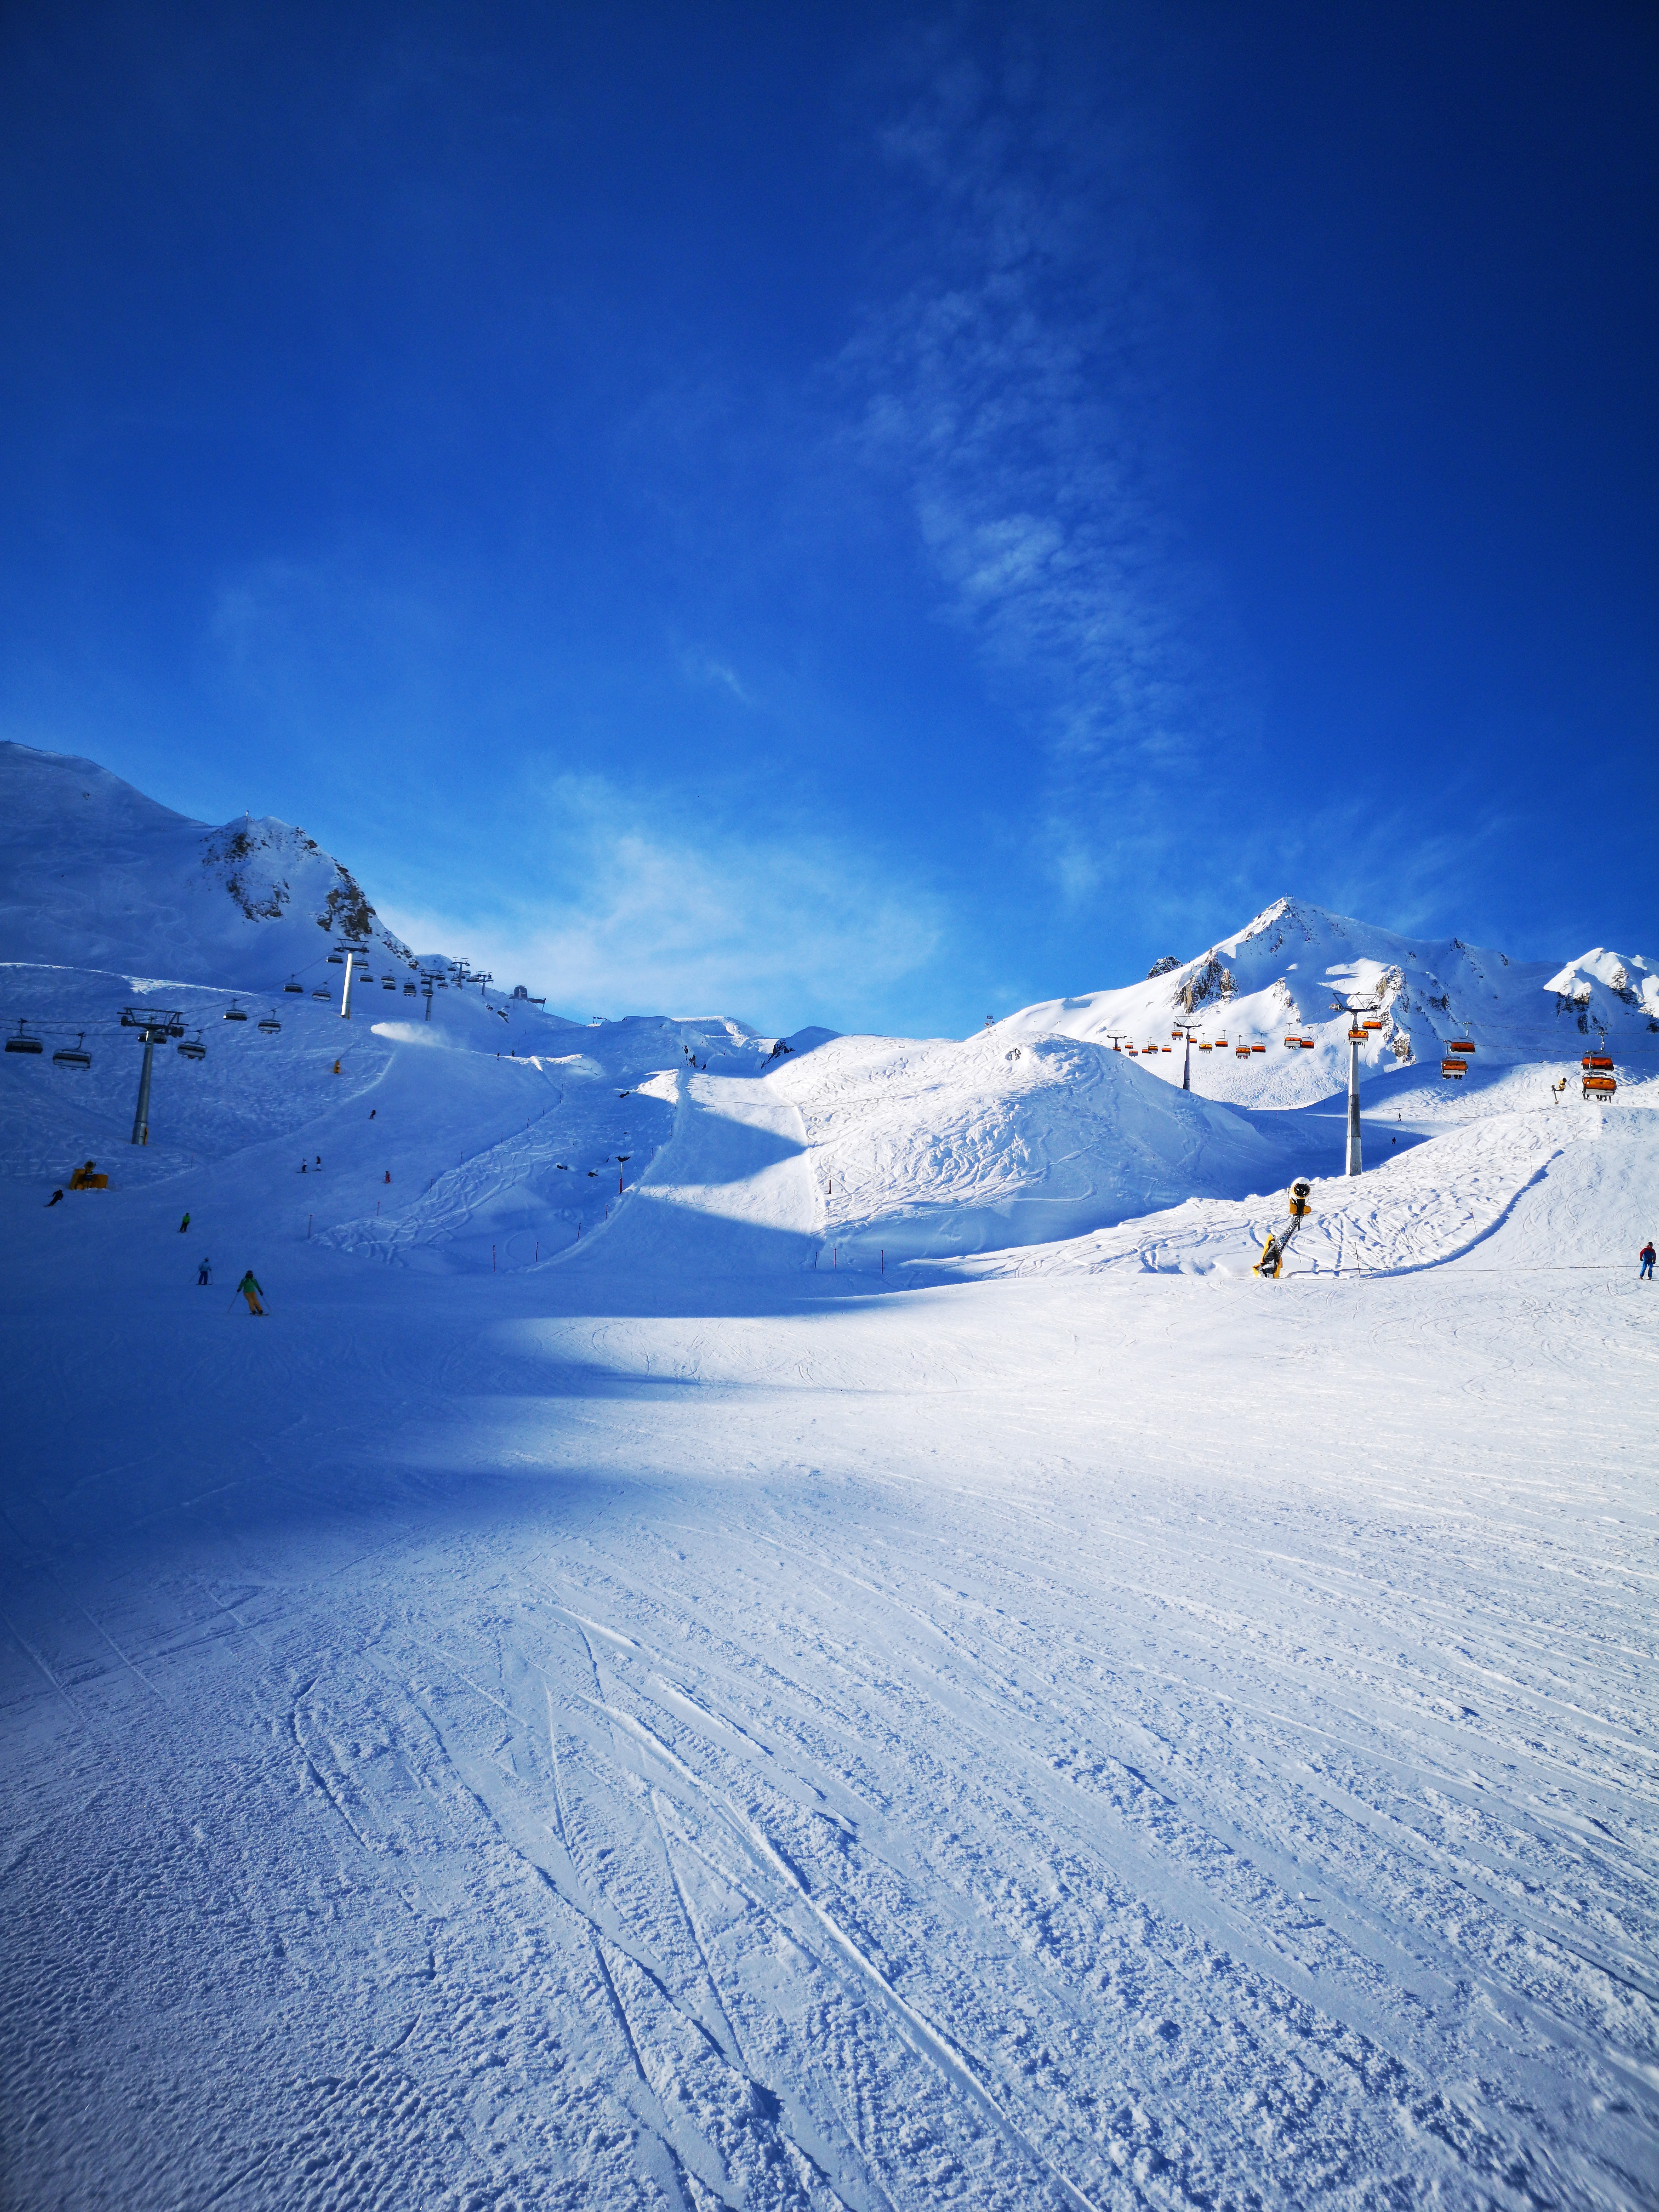 137986 descargar imagen naturaleza, montañas, descendencia, linaje, pista, pista de esquí, esquí, ascensores: fondos de pantalla y protectores de pantalla gratis